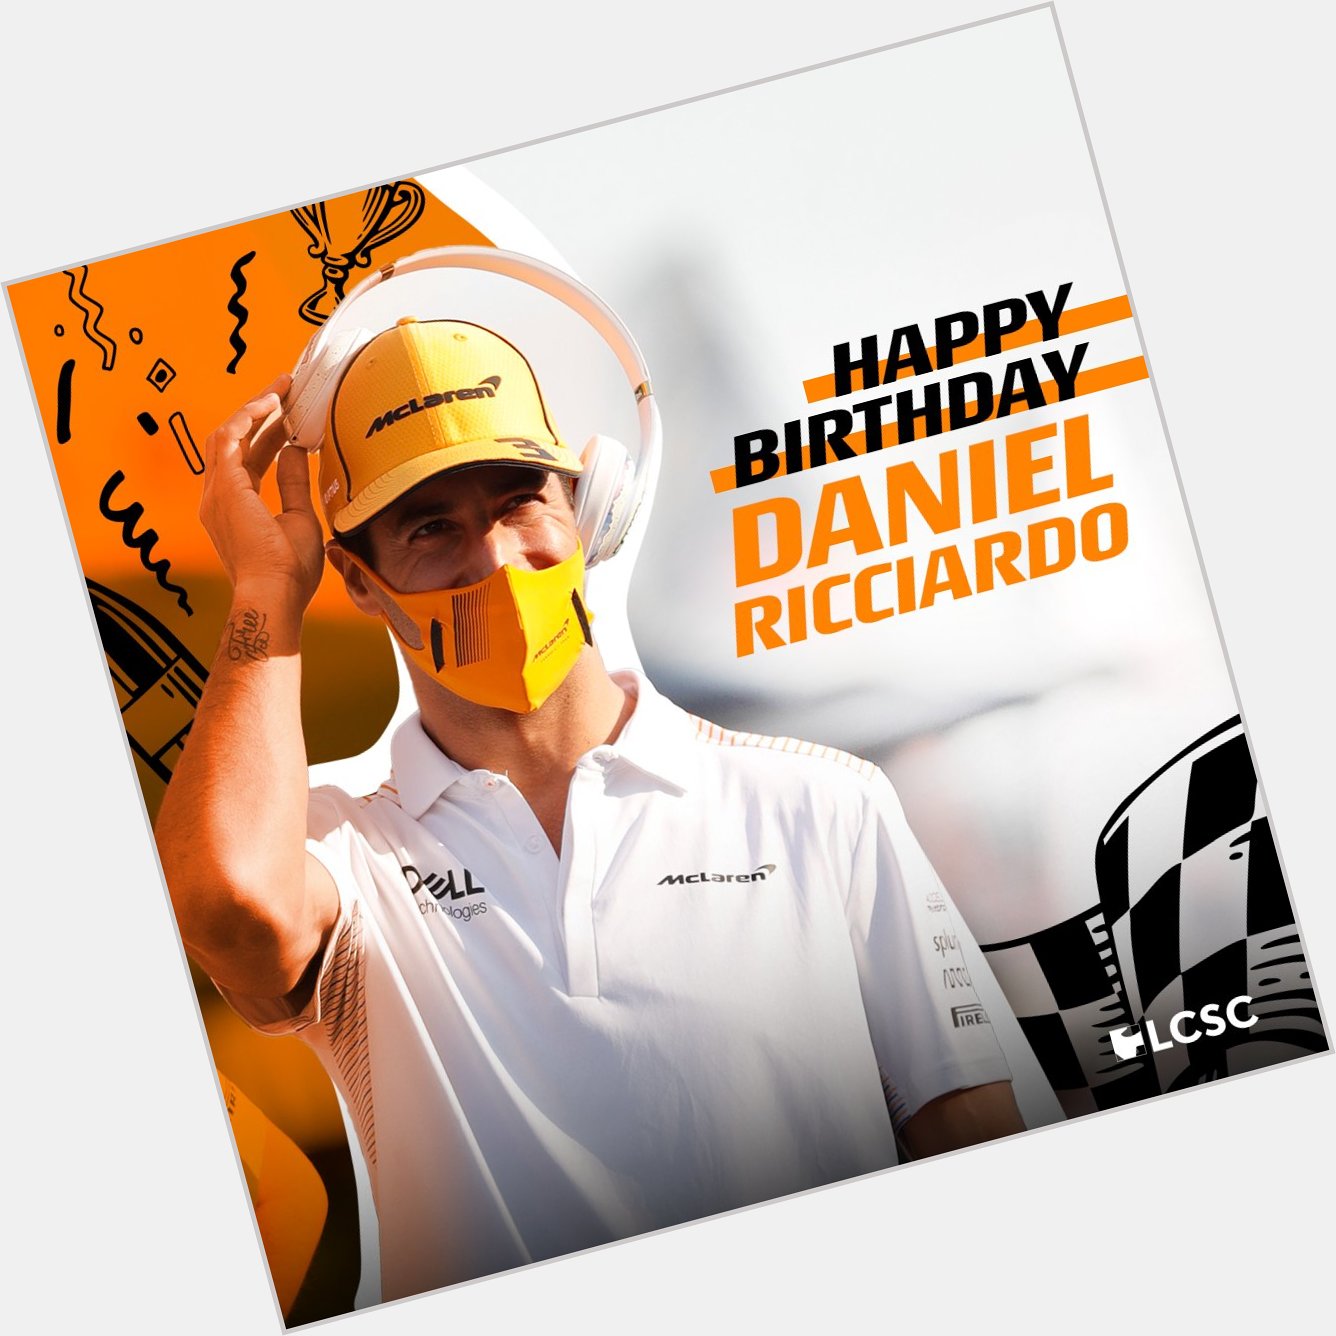 Happy Birthday to Daniel Ricciardo  Comment below if you are fan! 